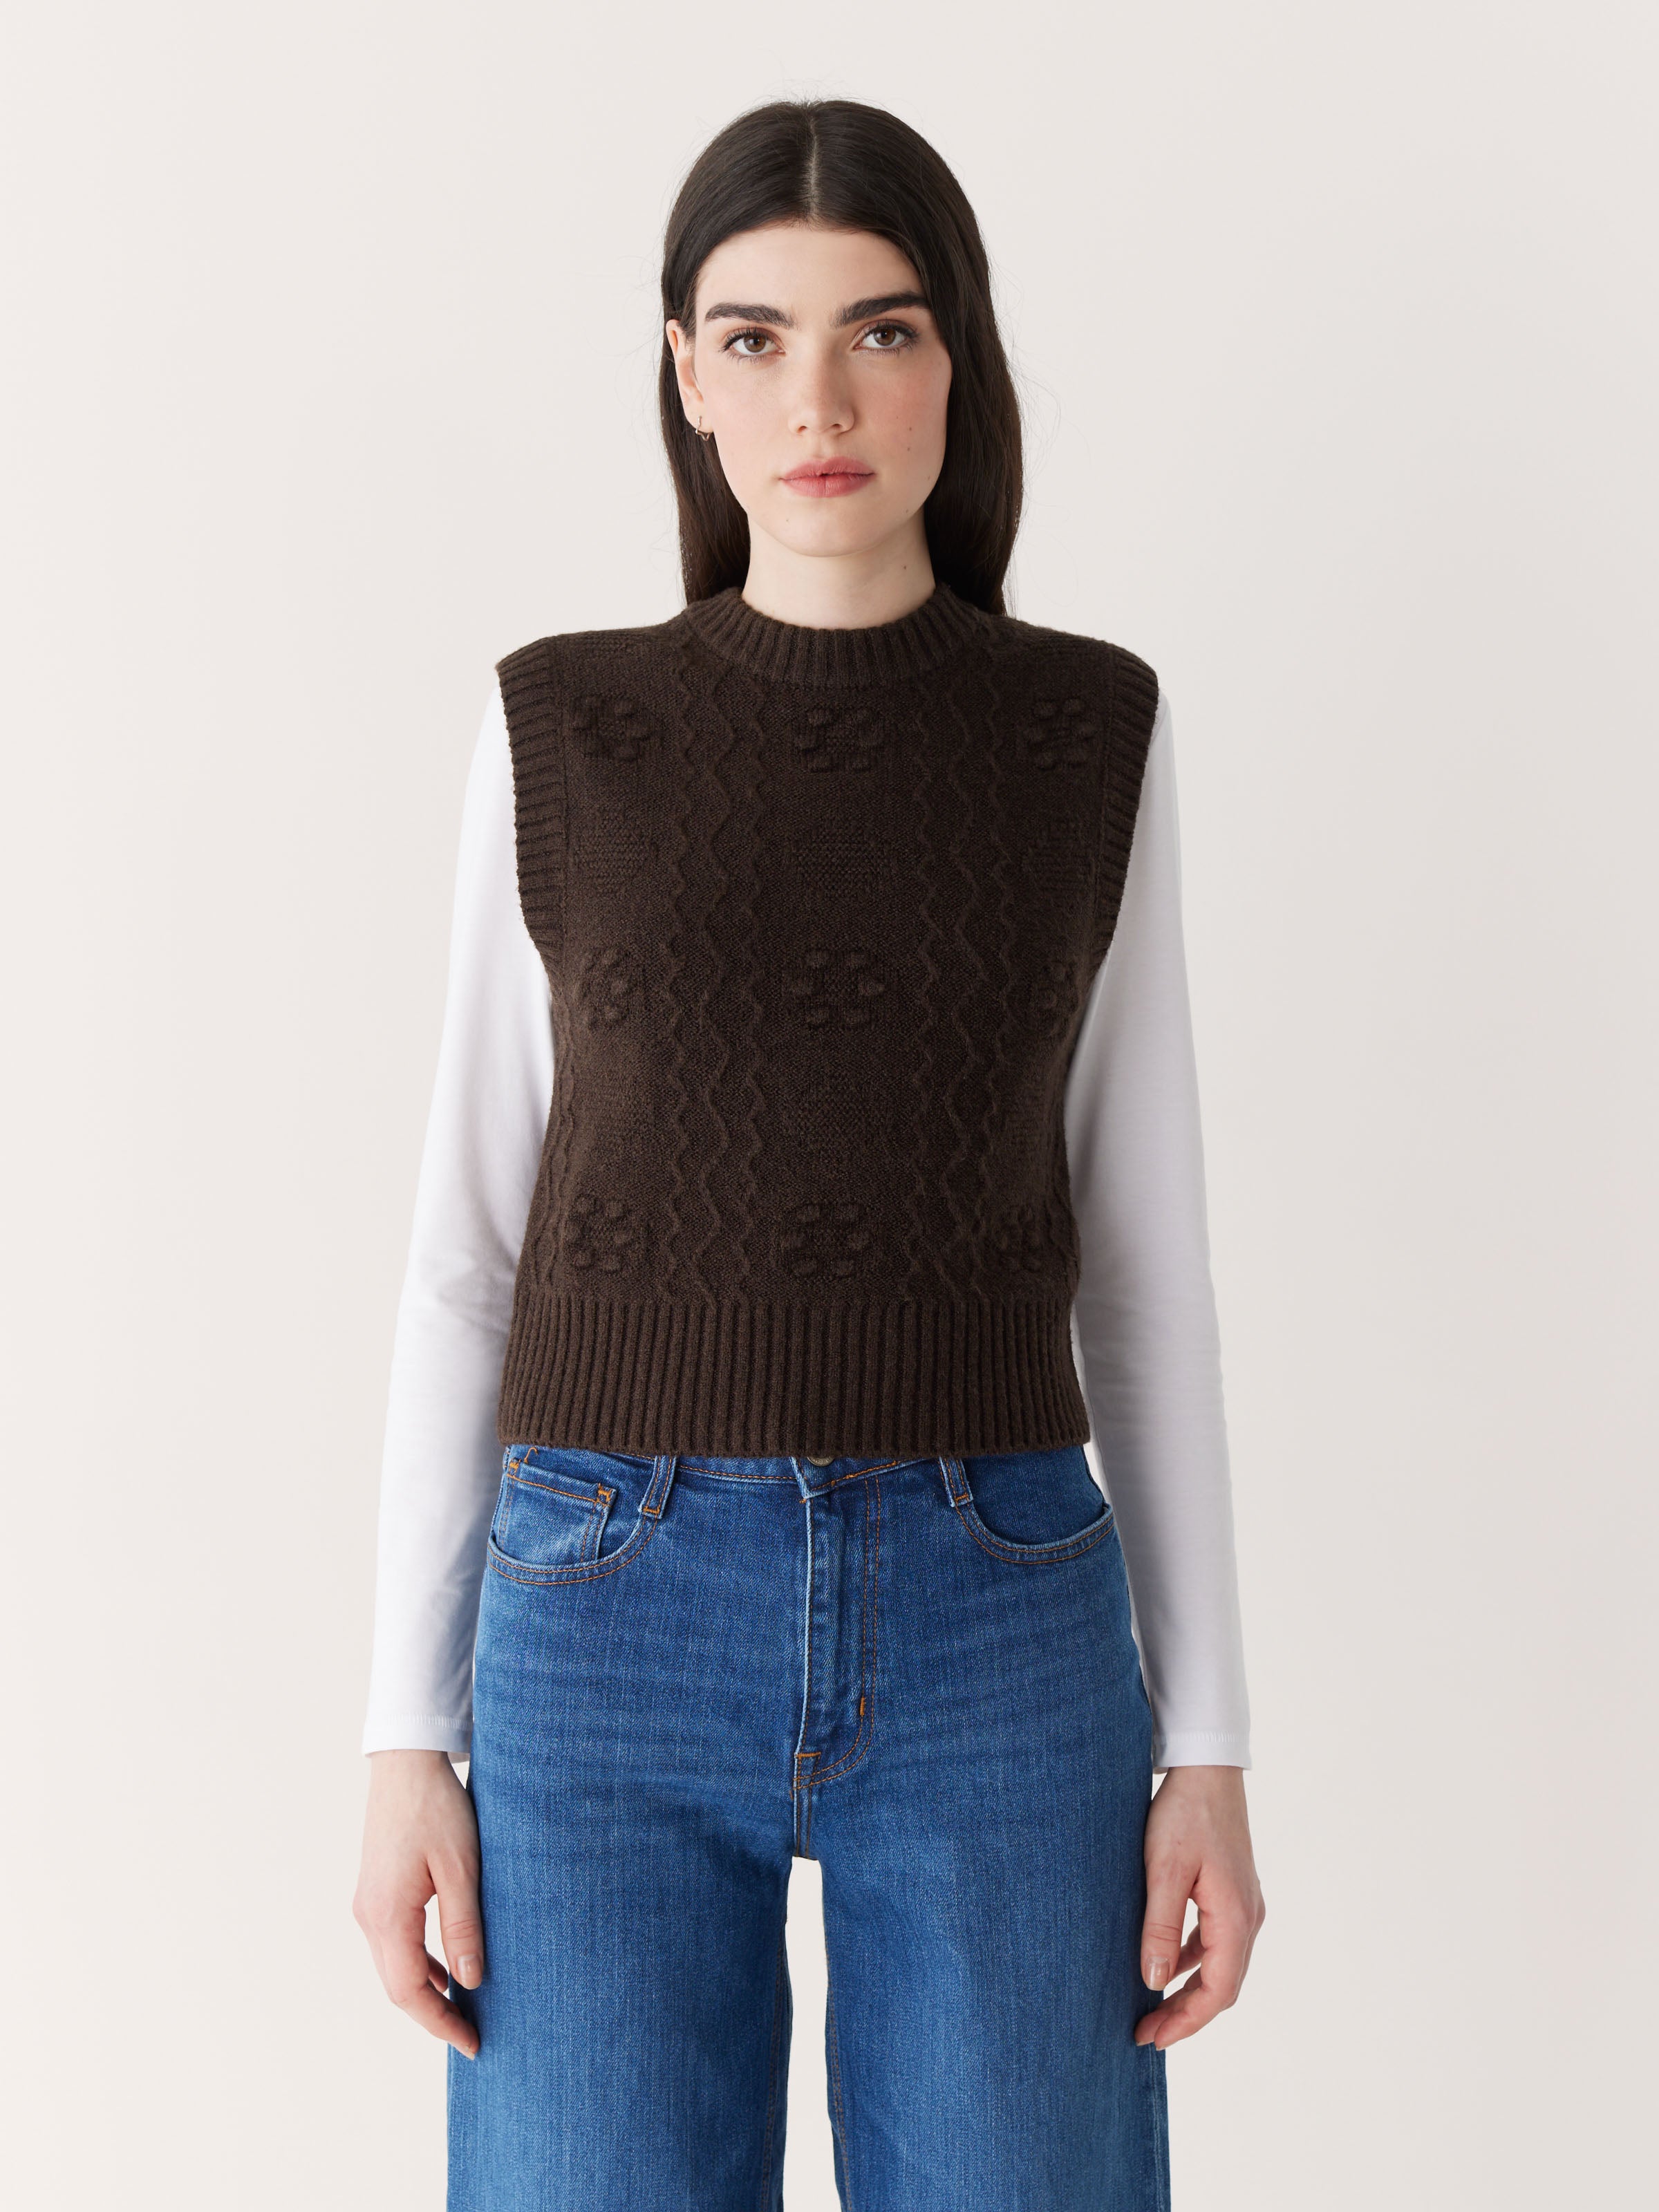 The Bobble Sweater Vest in Dark Brown